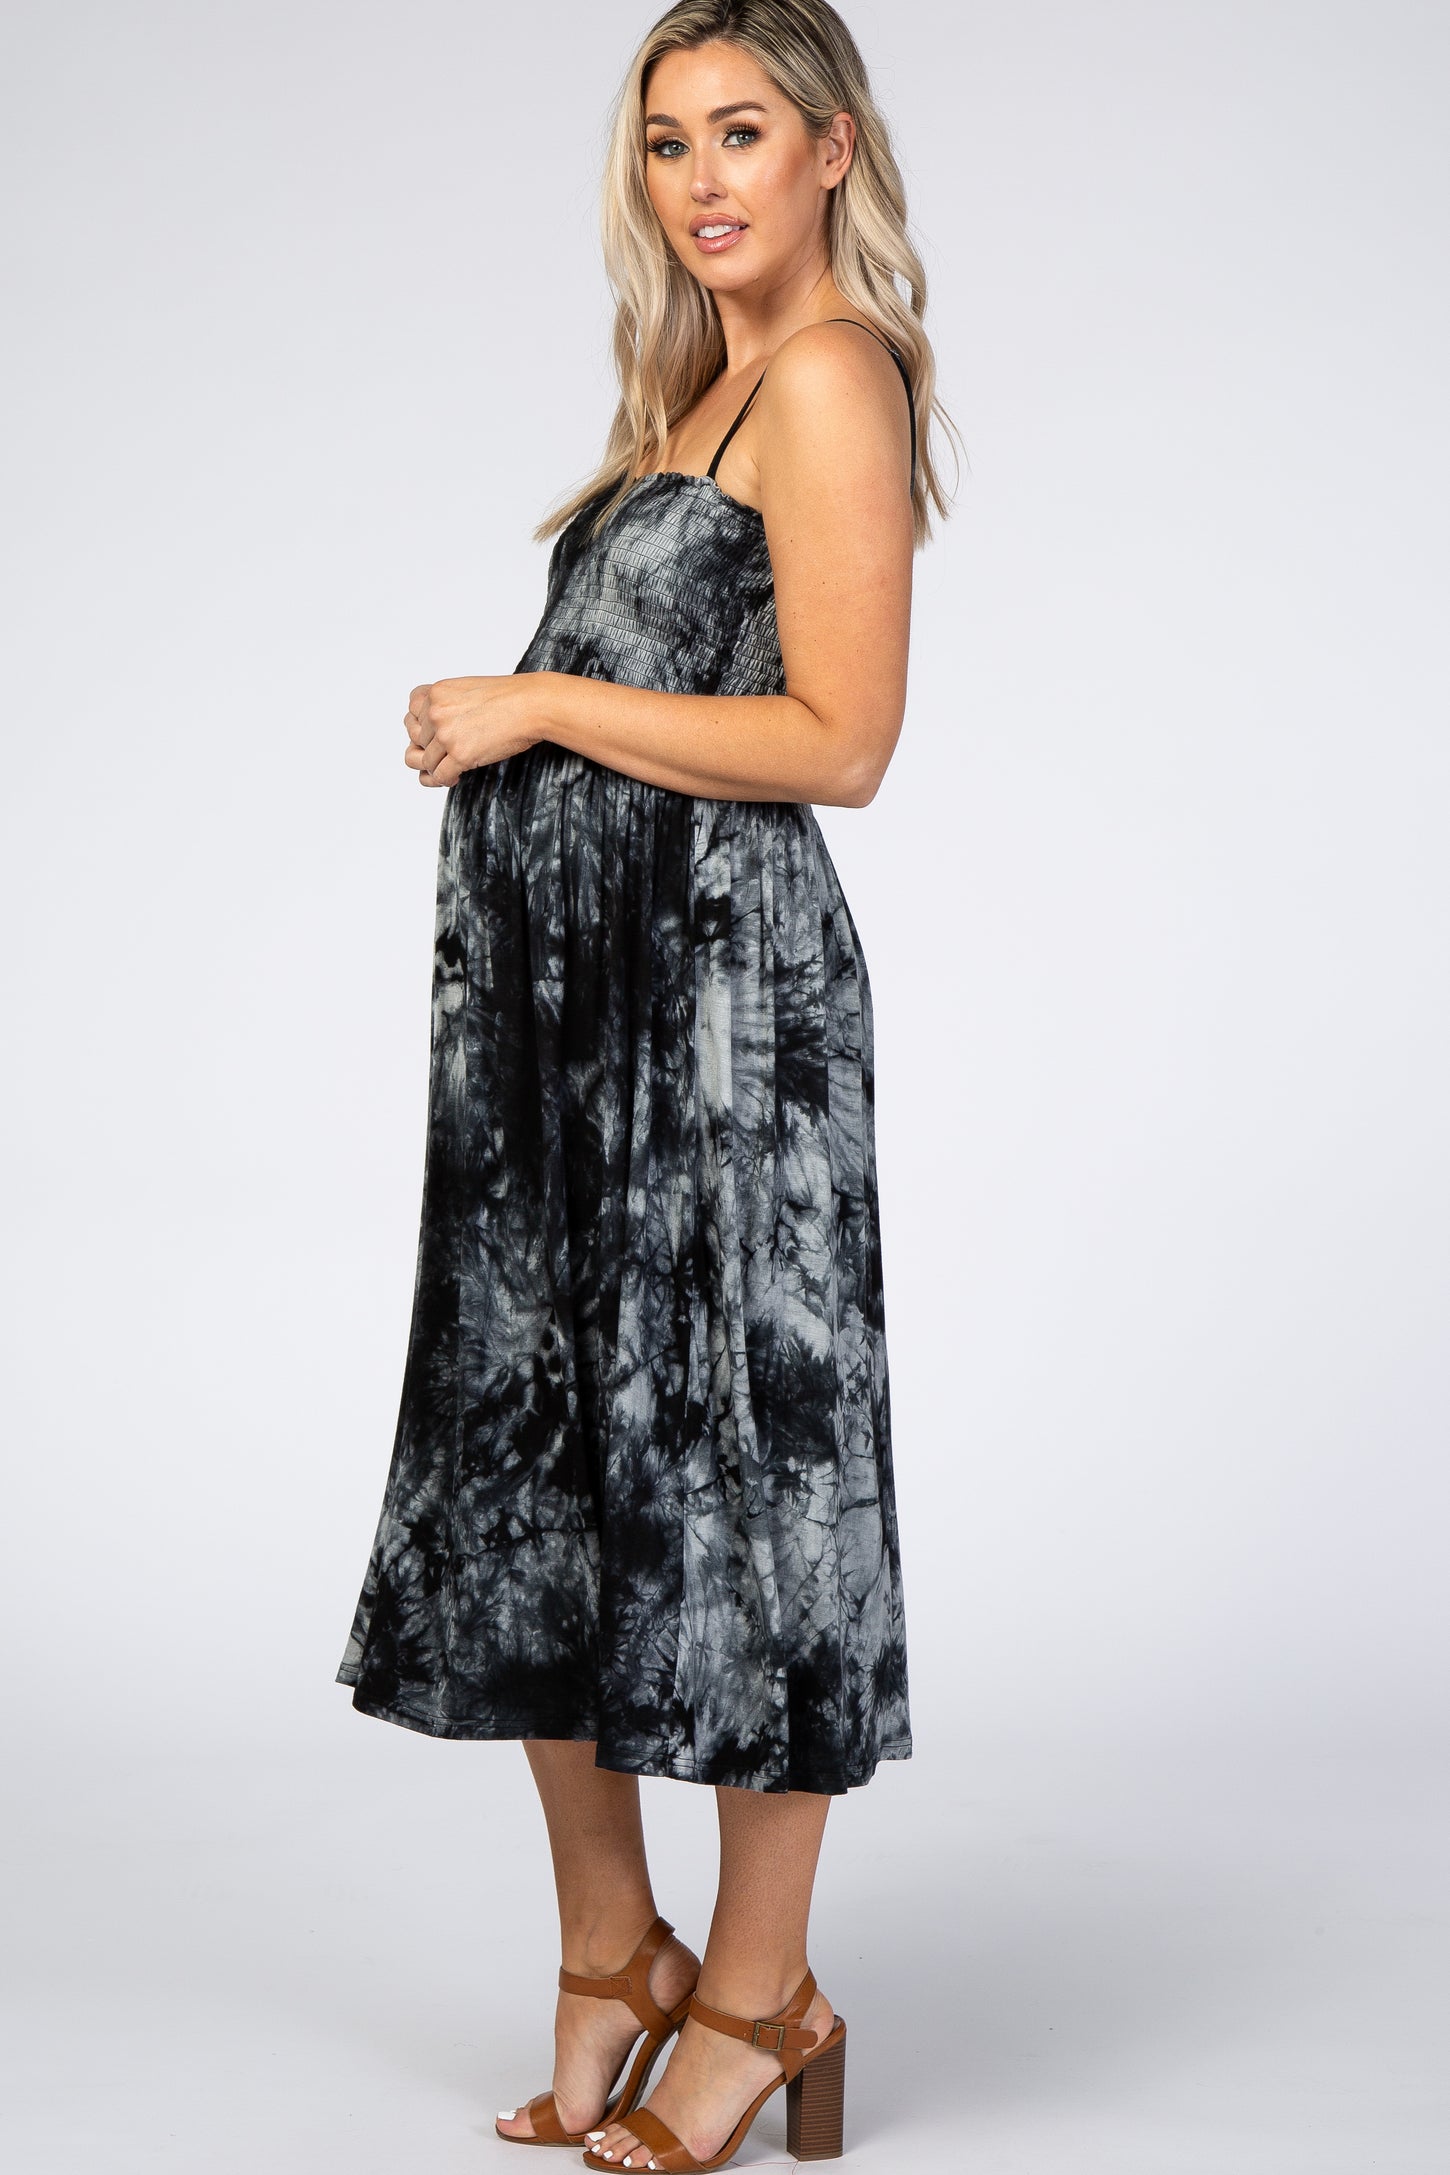 Charcoal Black Tie Dye Smocked Maternity Midi Dress